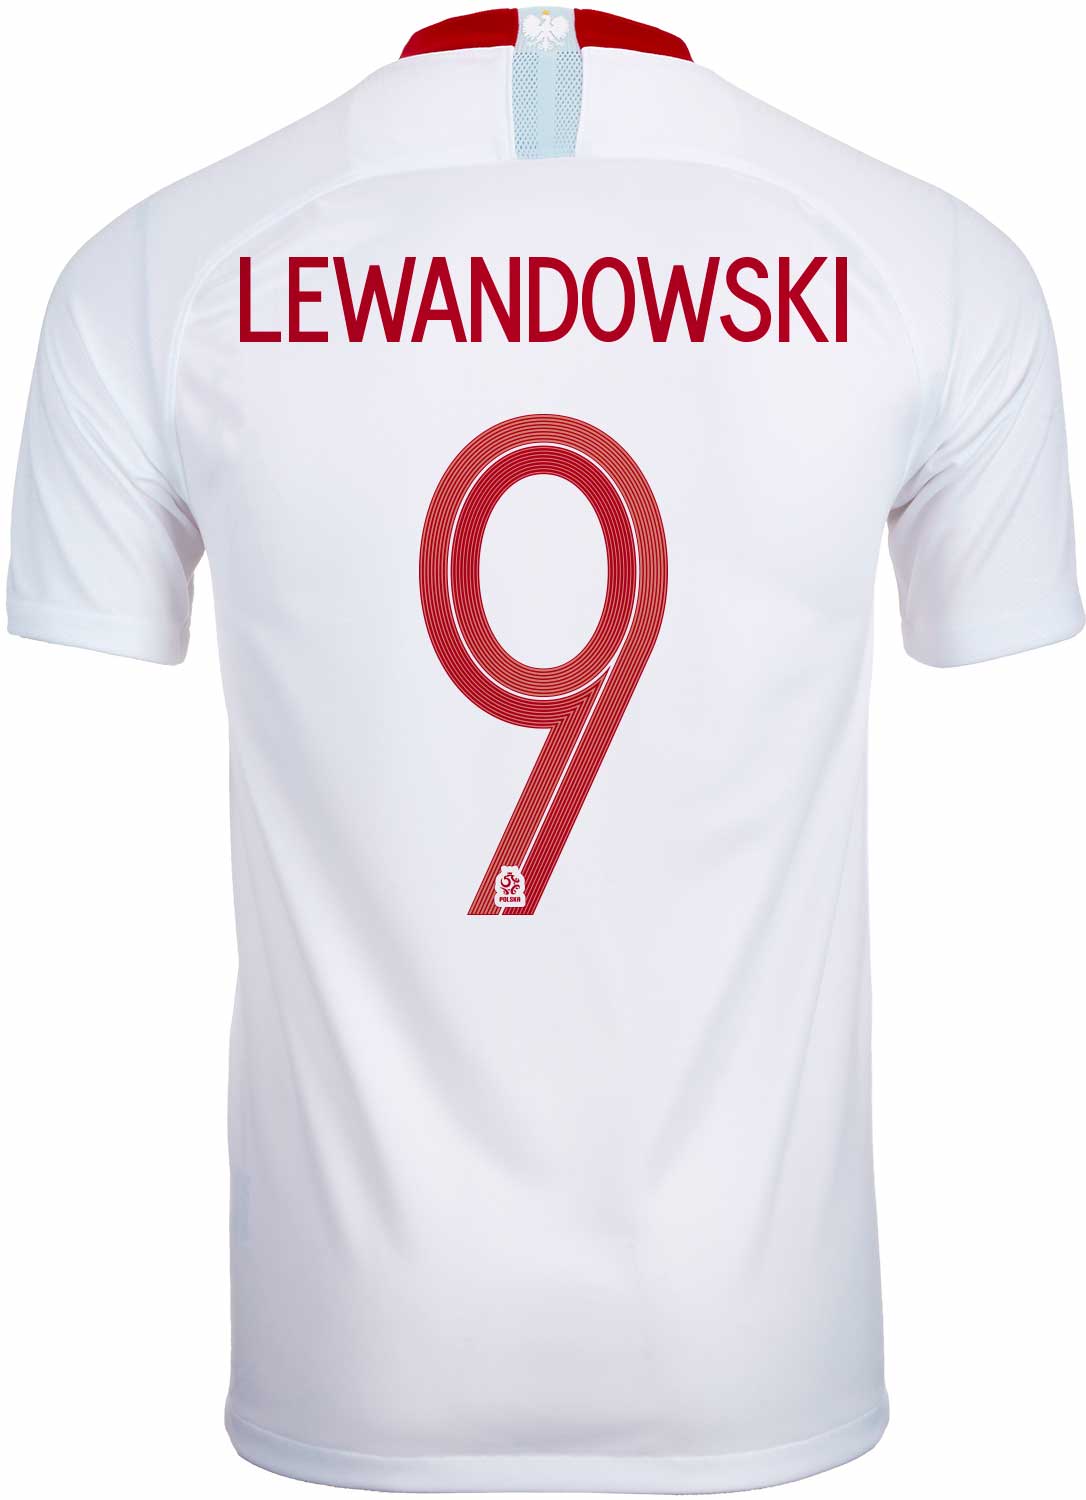 robert lewandowski shirt